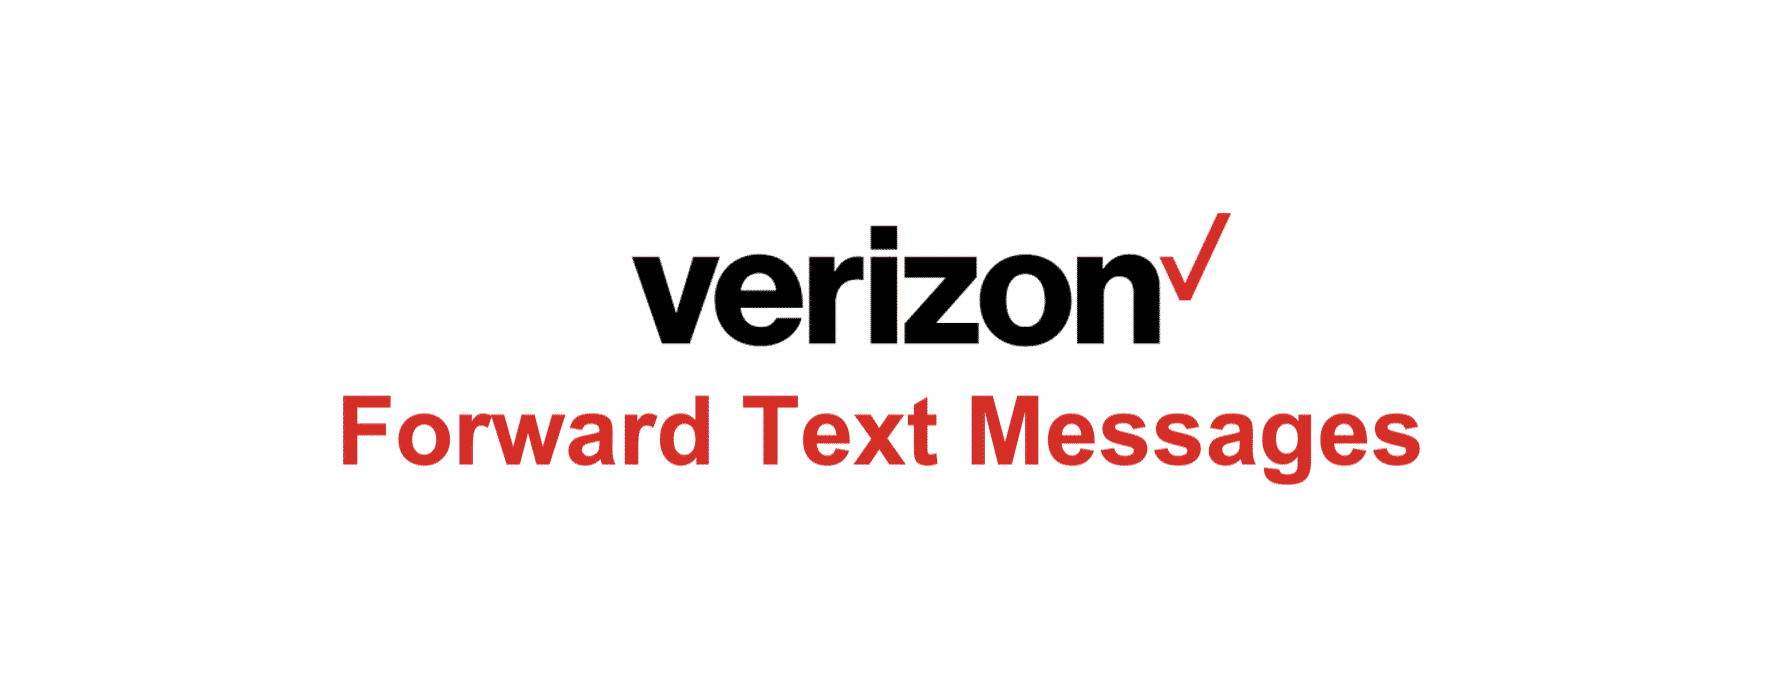 forward text messages verizon